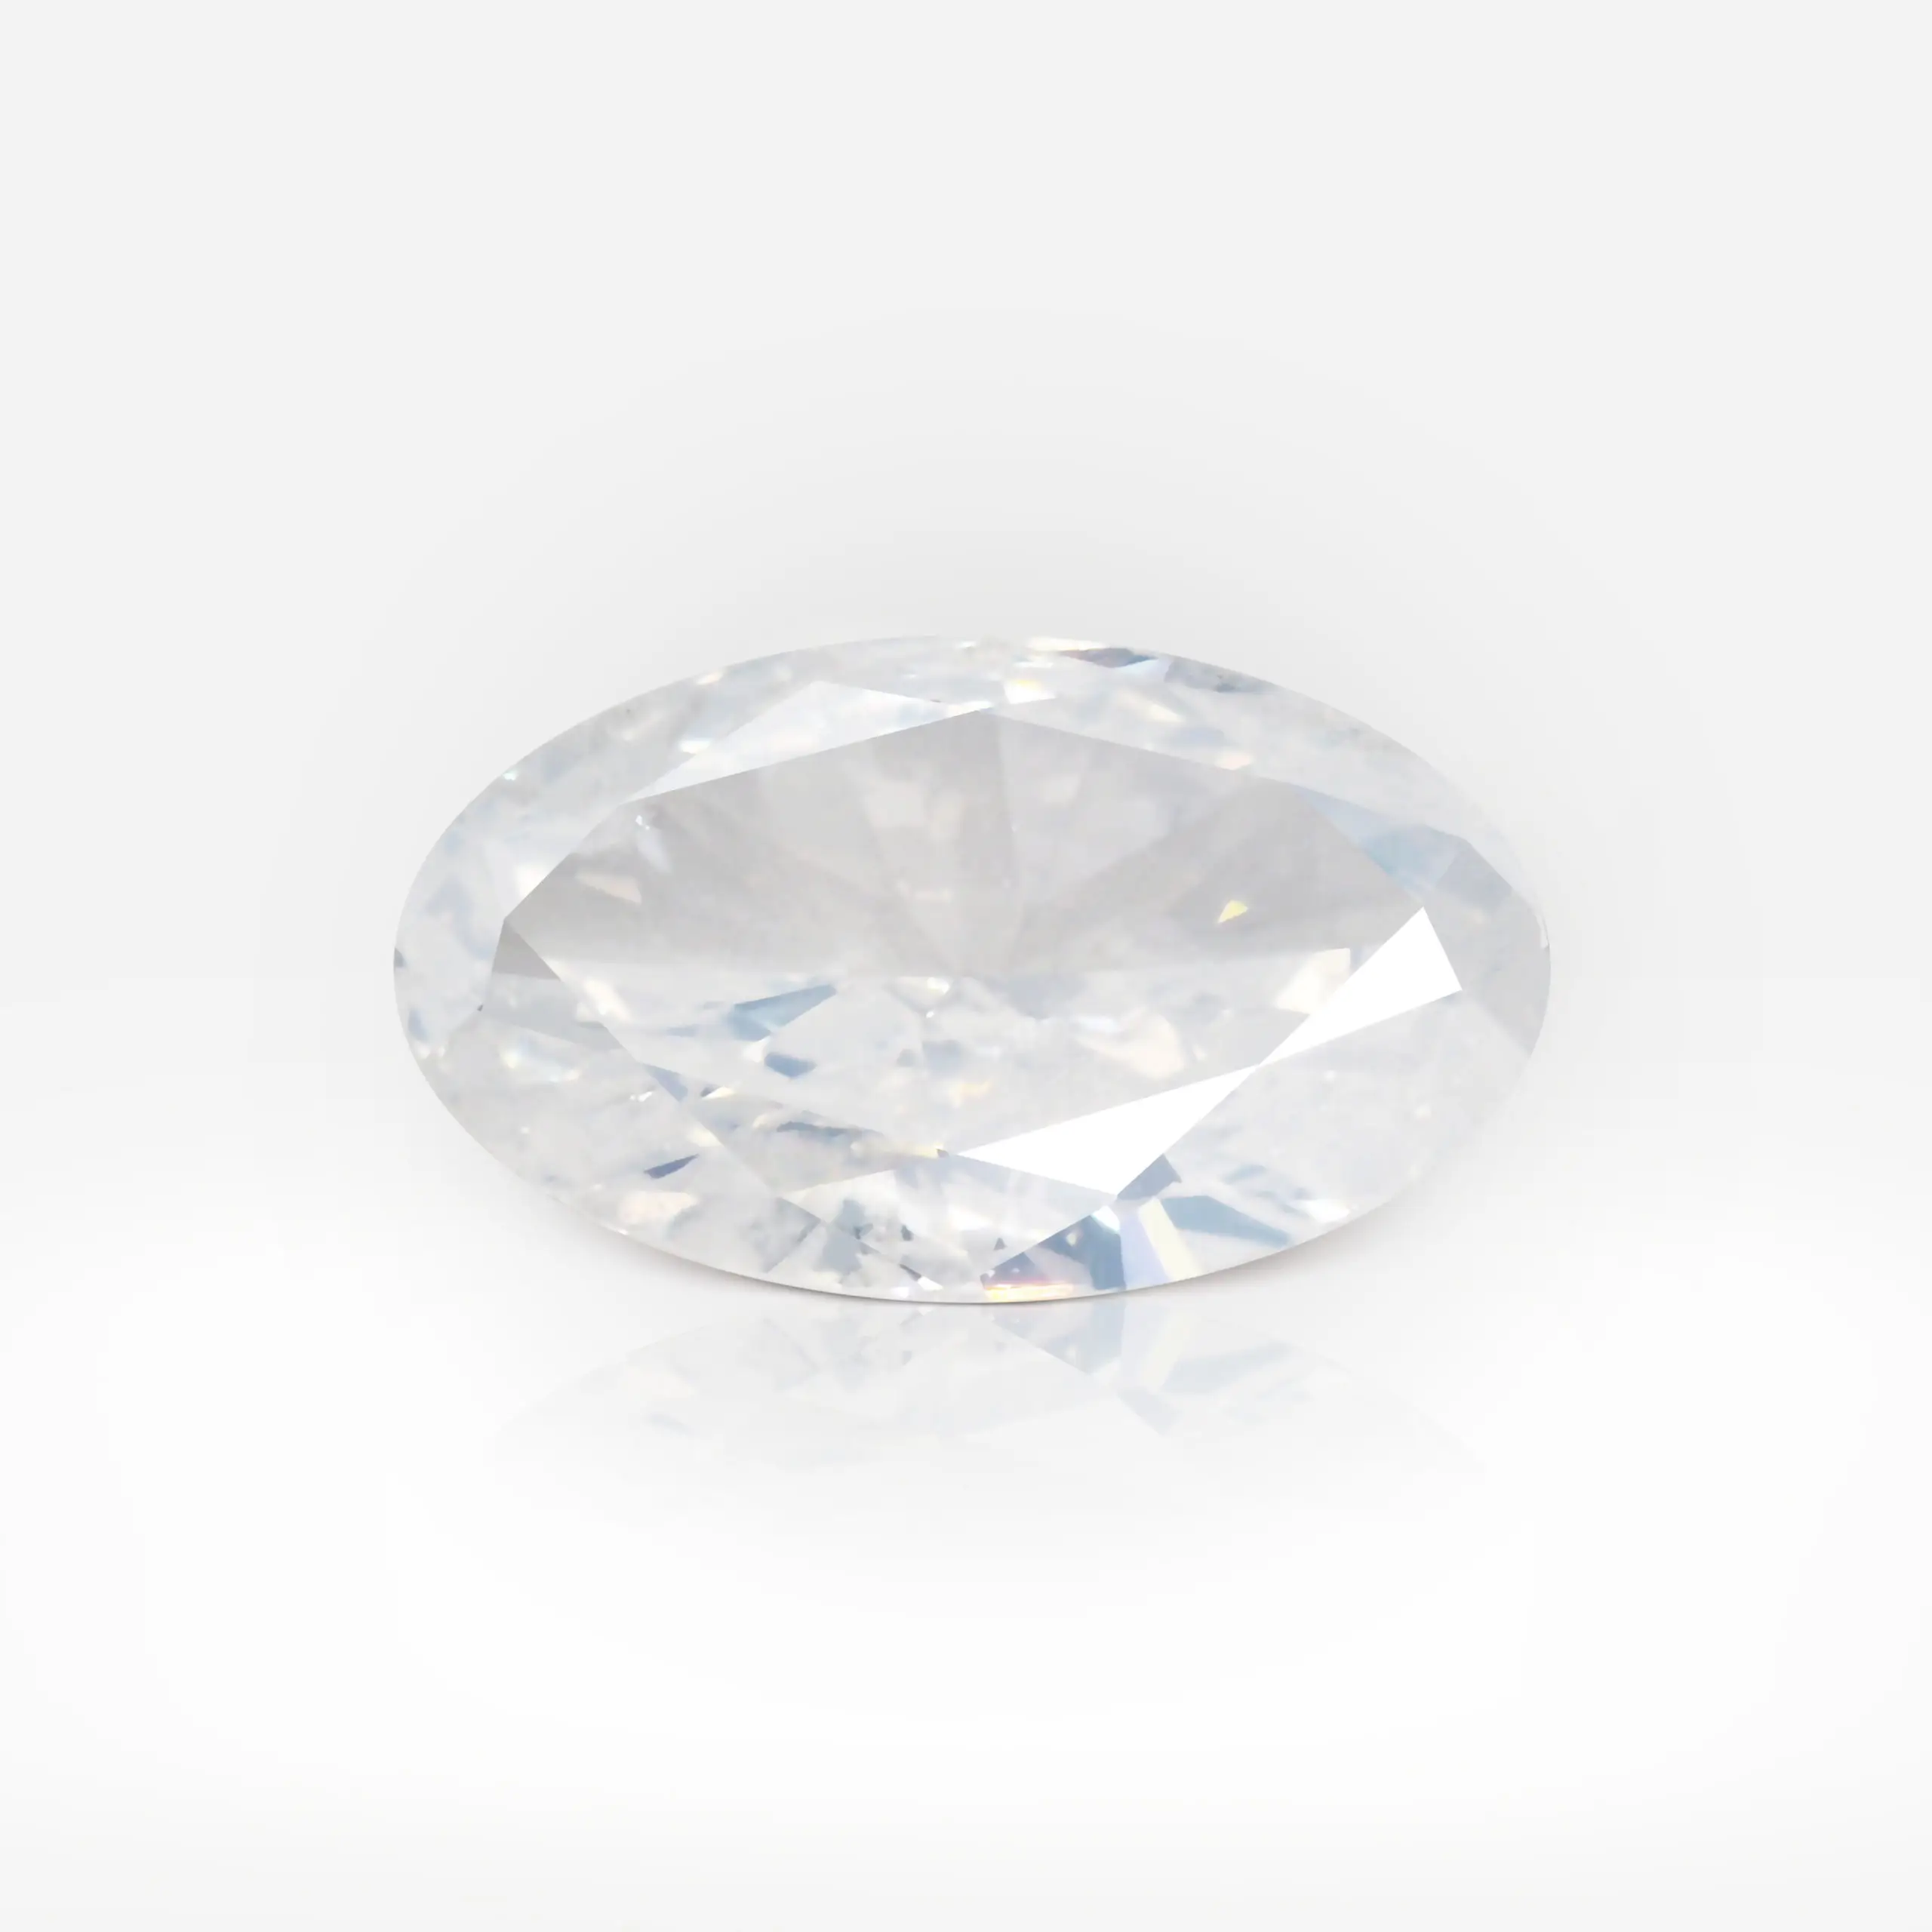 1.51 carat Fancy White Oval Shape Diamond GIA - picture 1